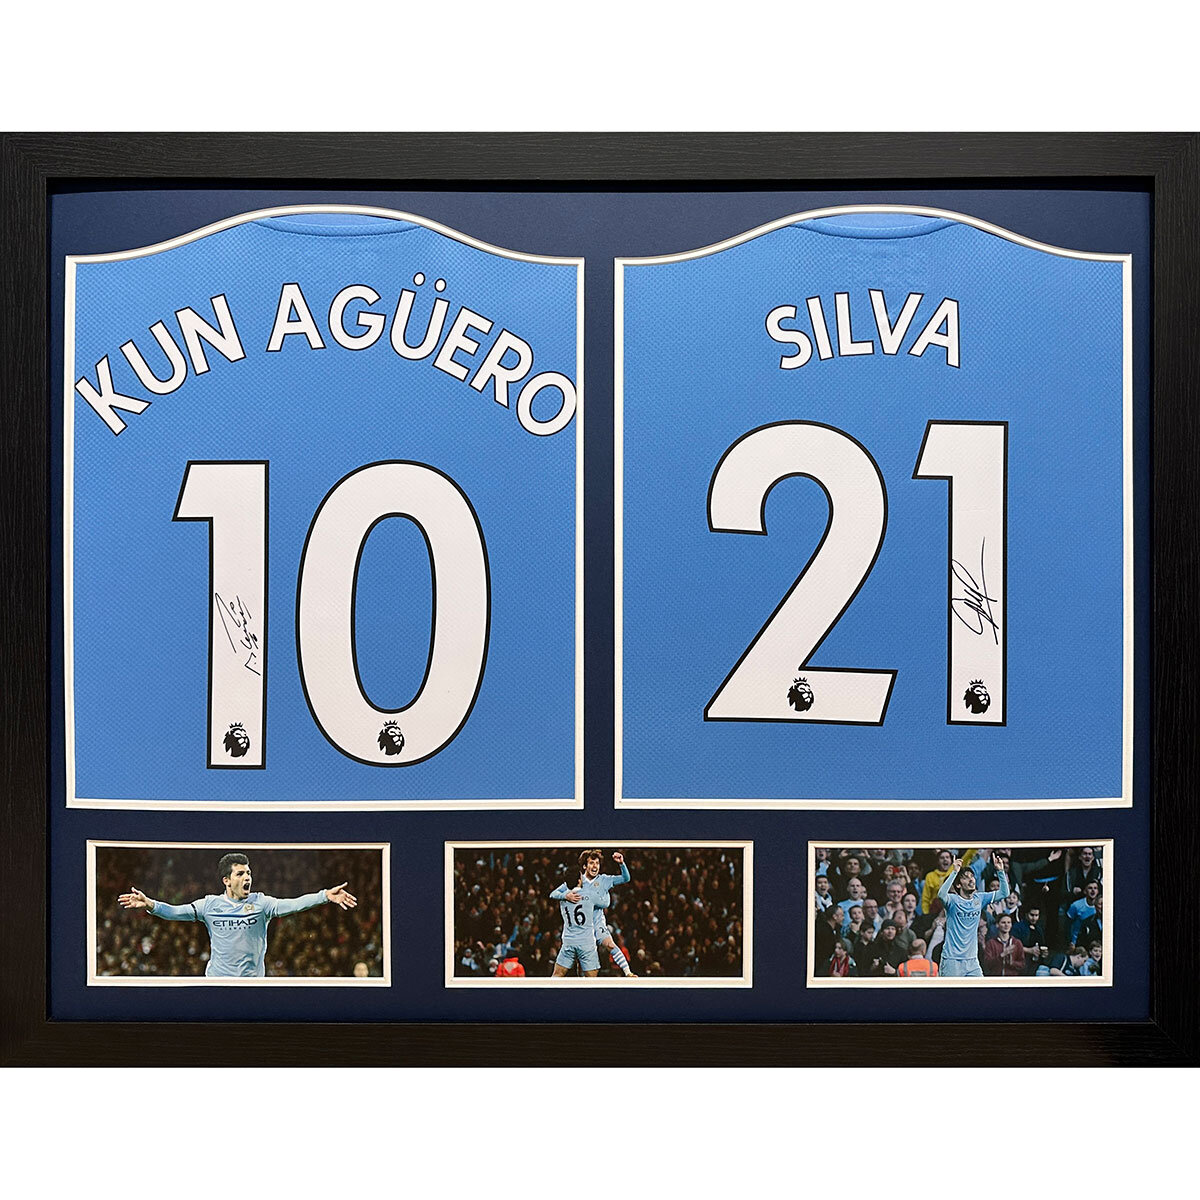 Aguero & Silva double signed Manchester City shirt display